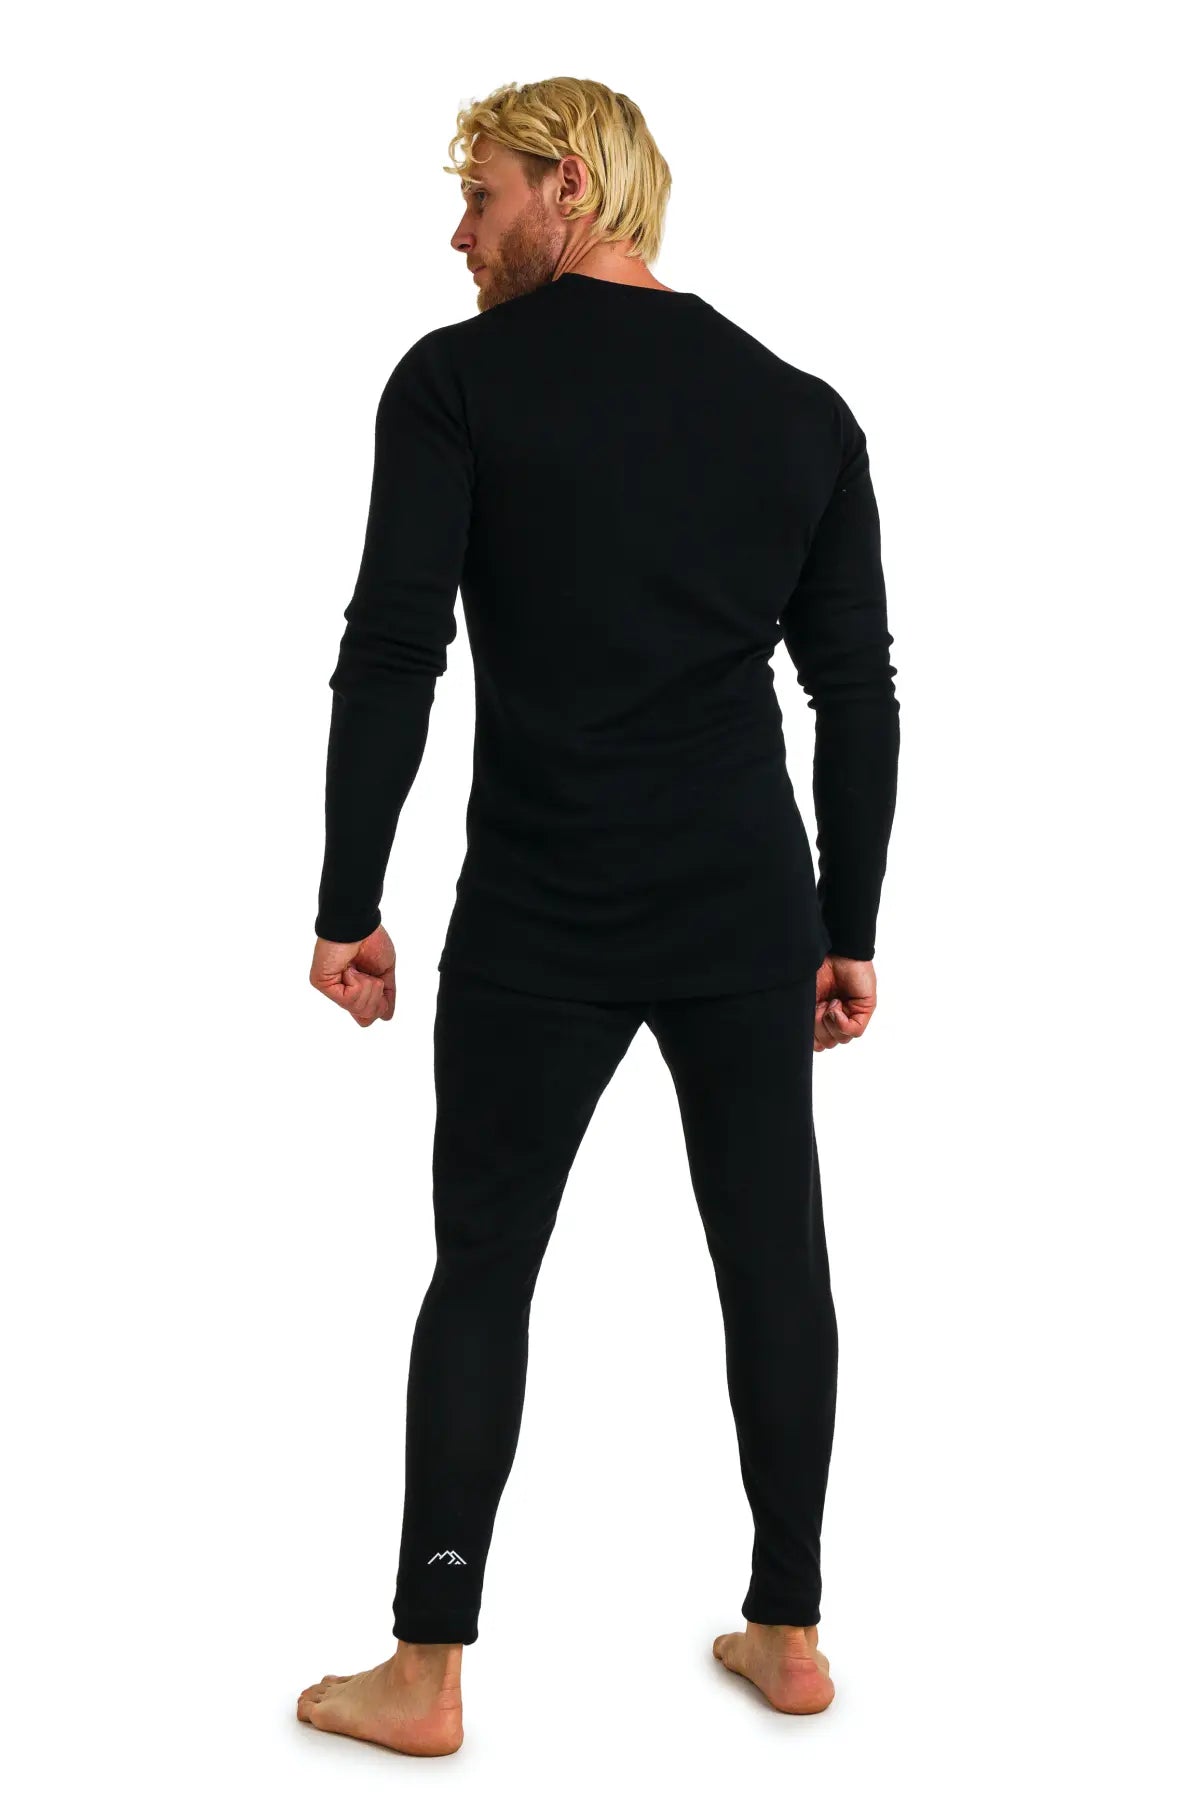 Men's Merino Wool Thermal Set Black  Wool underwear men's – Merino Tech